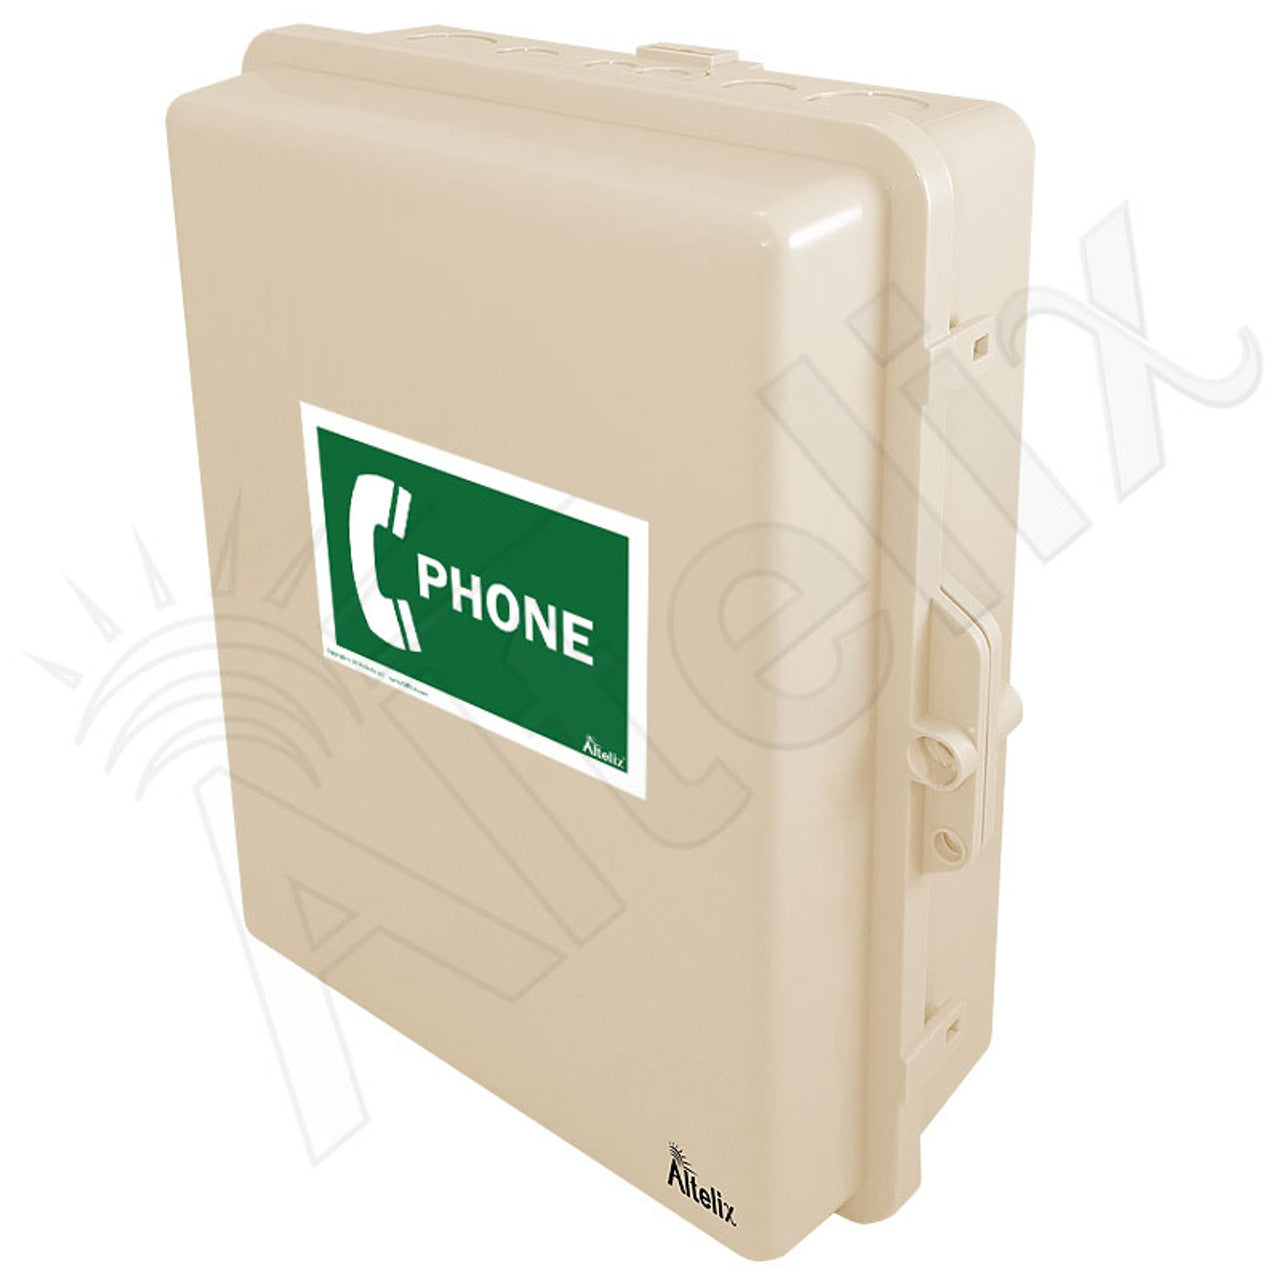 Buy light-ivory Altelix Outdoor Weatherproof Phone Call Box for Slim-Line Phones, 14x11x5 with Phone Label